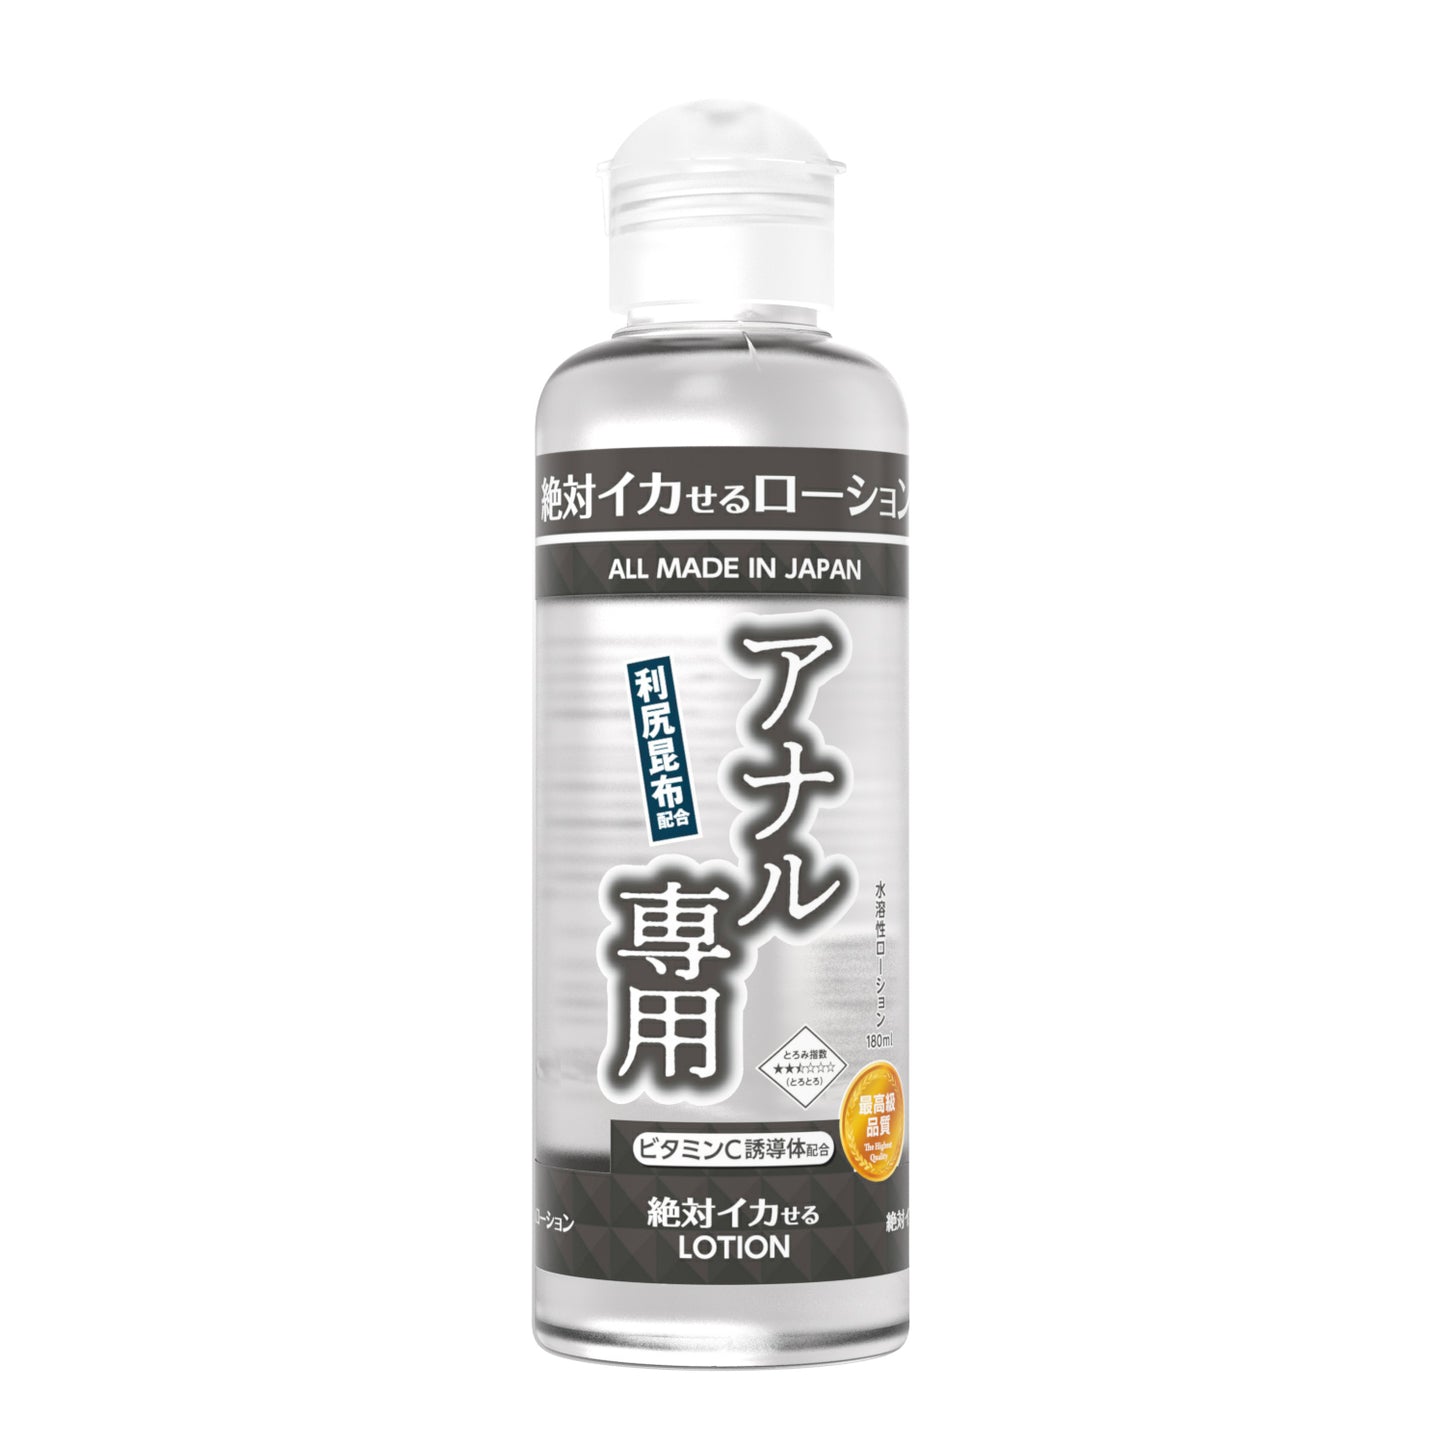 SSI JAPAN 絕對潮吹水性潤滑液 肛交專用 180ml